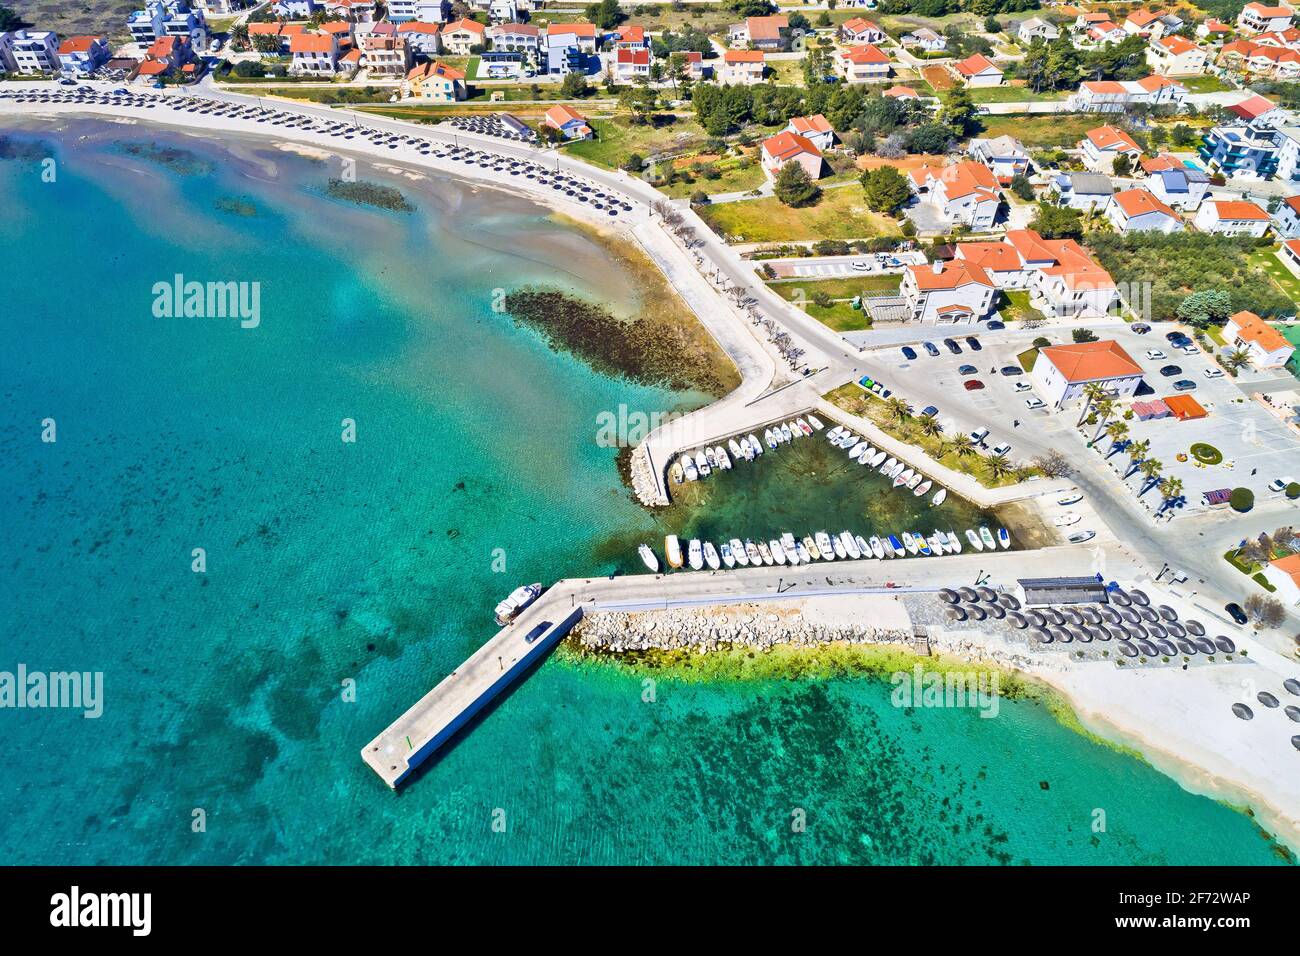 Island of Vir beach and waterfront aerial view, Dalmatia region of Croatia Stock Photo